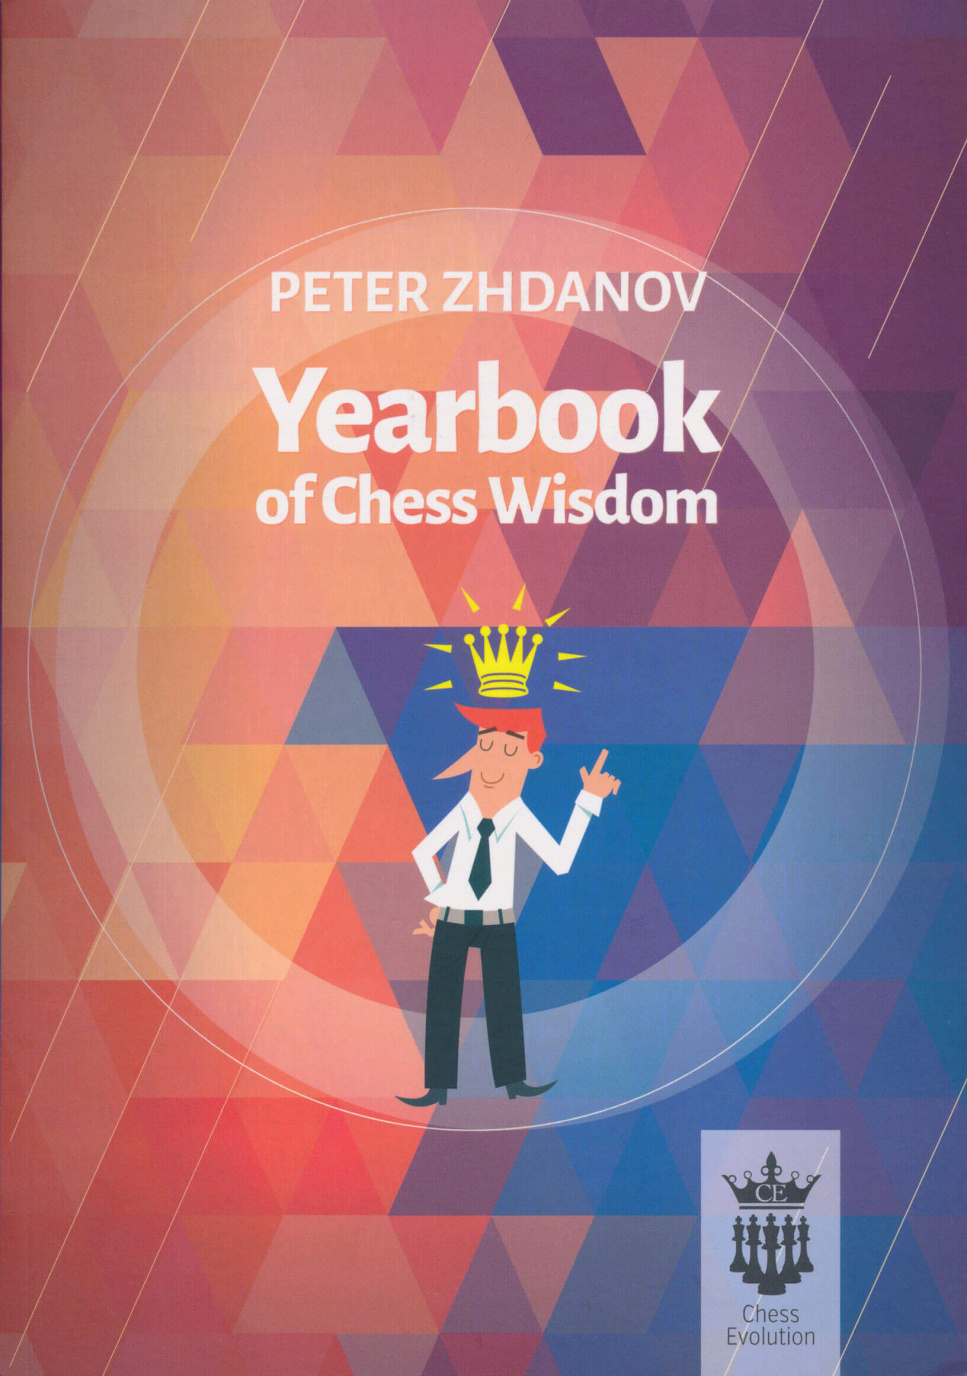 Livre sur les échecs de Peter Zhdanov : Yearbook of Chess Wisdom